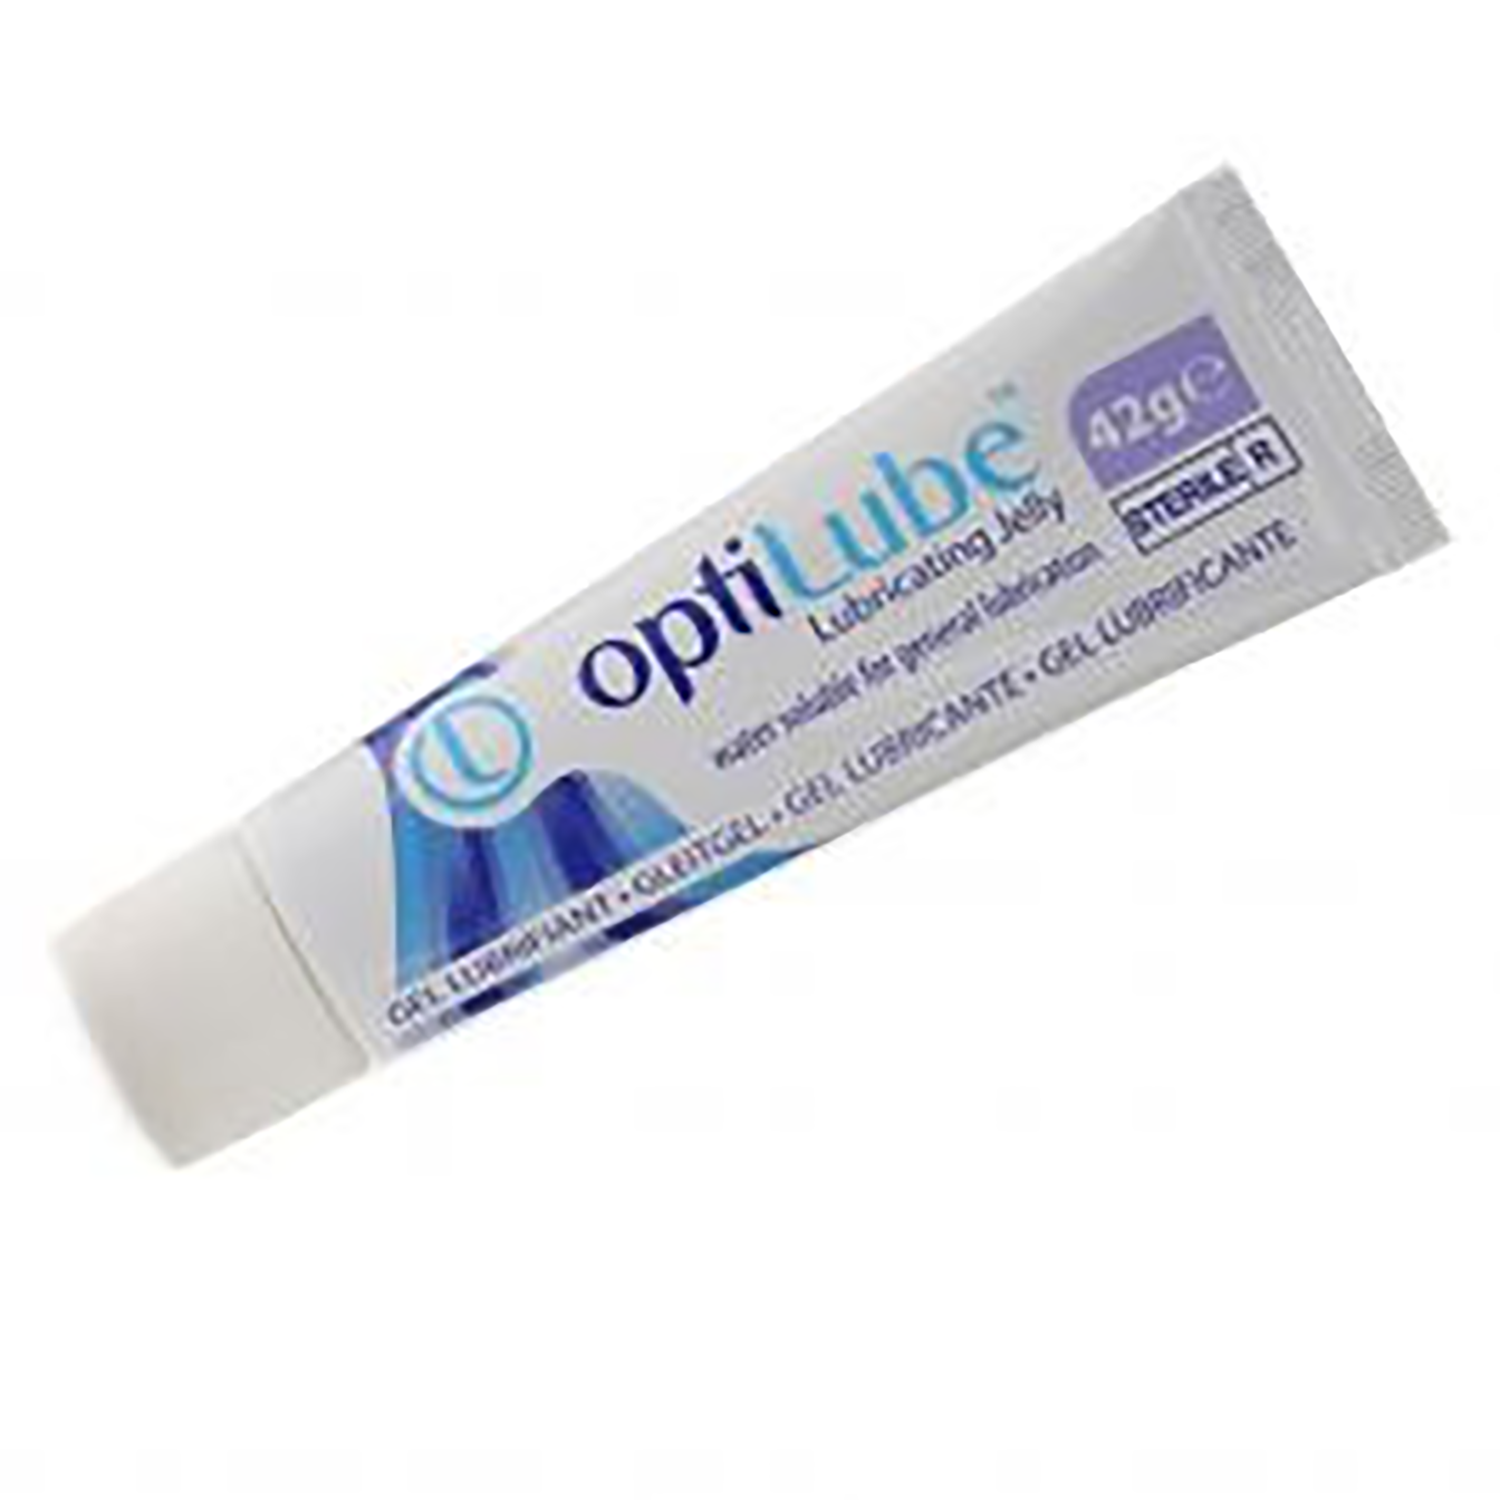 OptiLube | Lubricating Jelly | Sterile | 42g | Single (No packaging) (1)